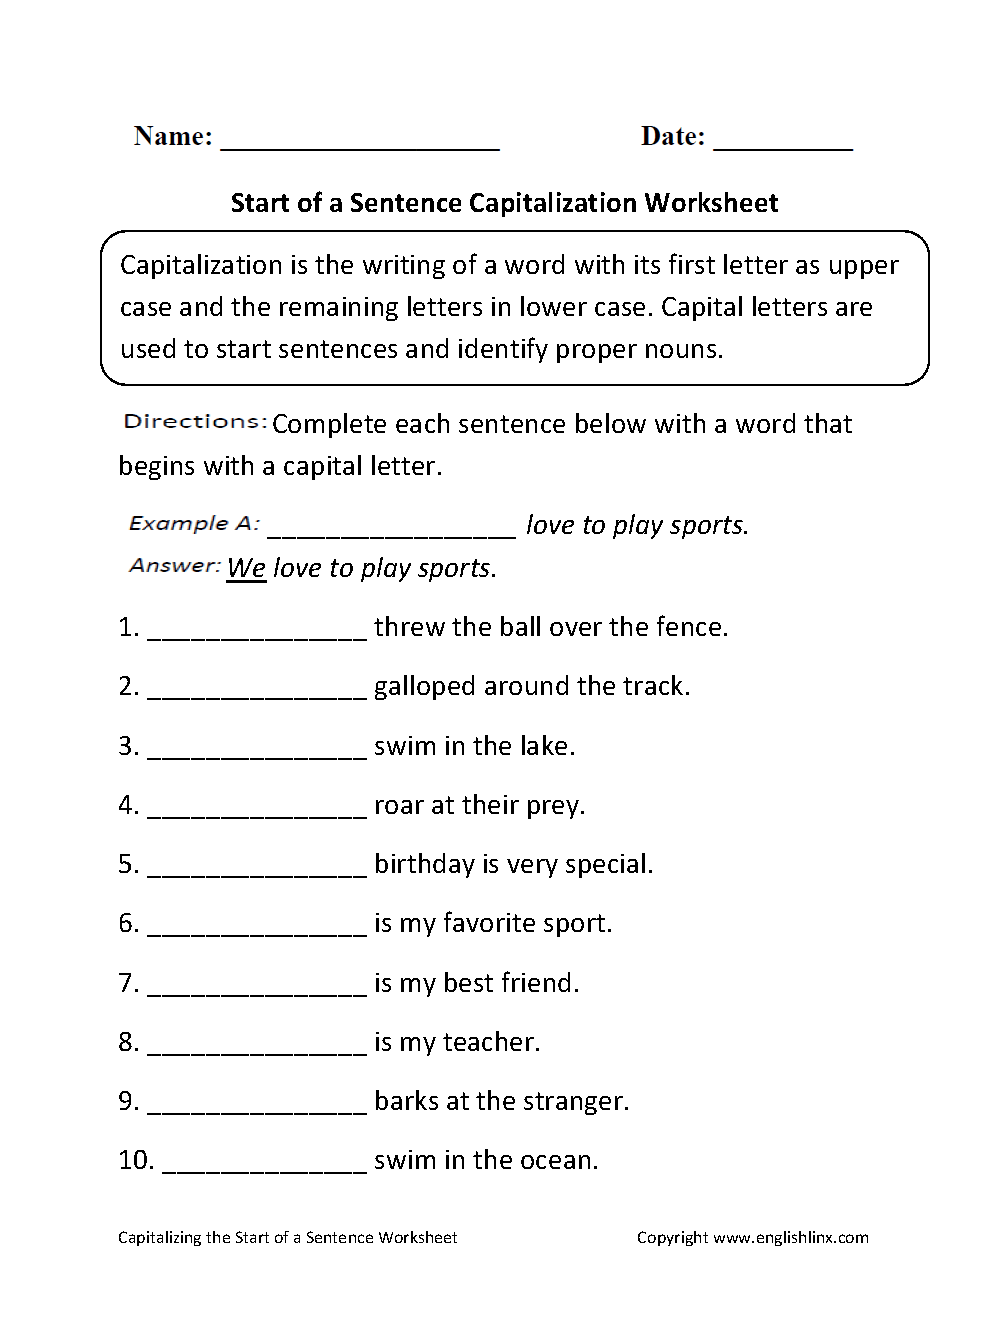 Start of Sentence Capitalization Worksheets